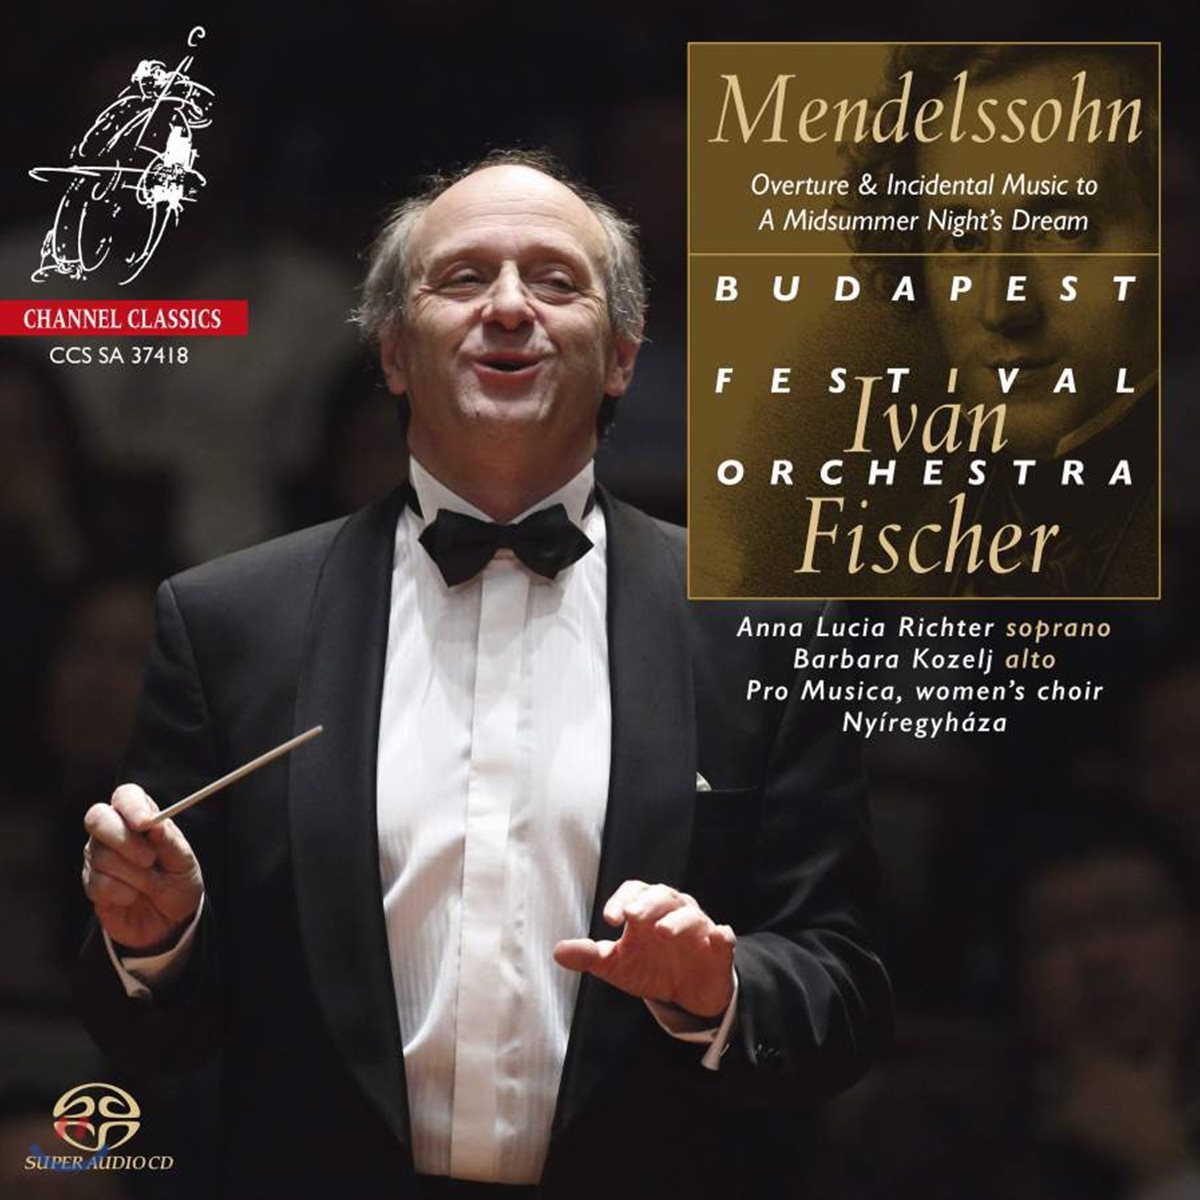 Ivan Fischer 멘델스존: 한여름 밤의 꿈 (Mendelssohn: A Midsummer Night's Dream) 이반 피셔, 부다페스트 페스티벌 오케스트라